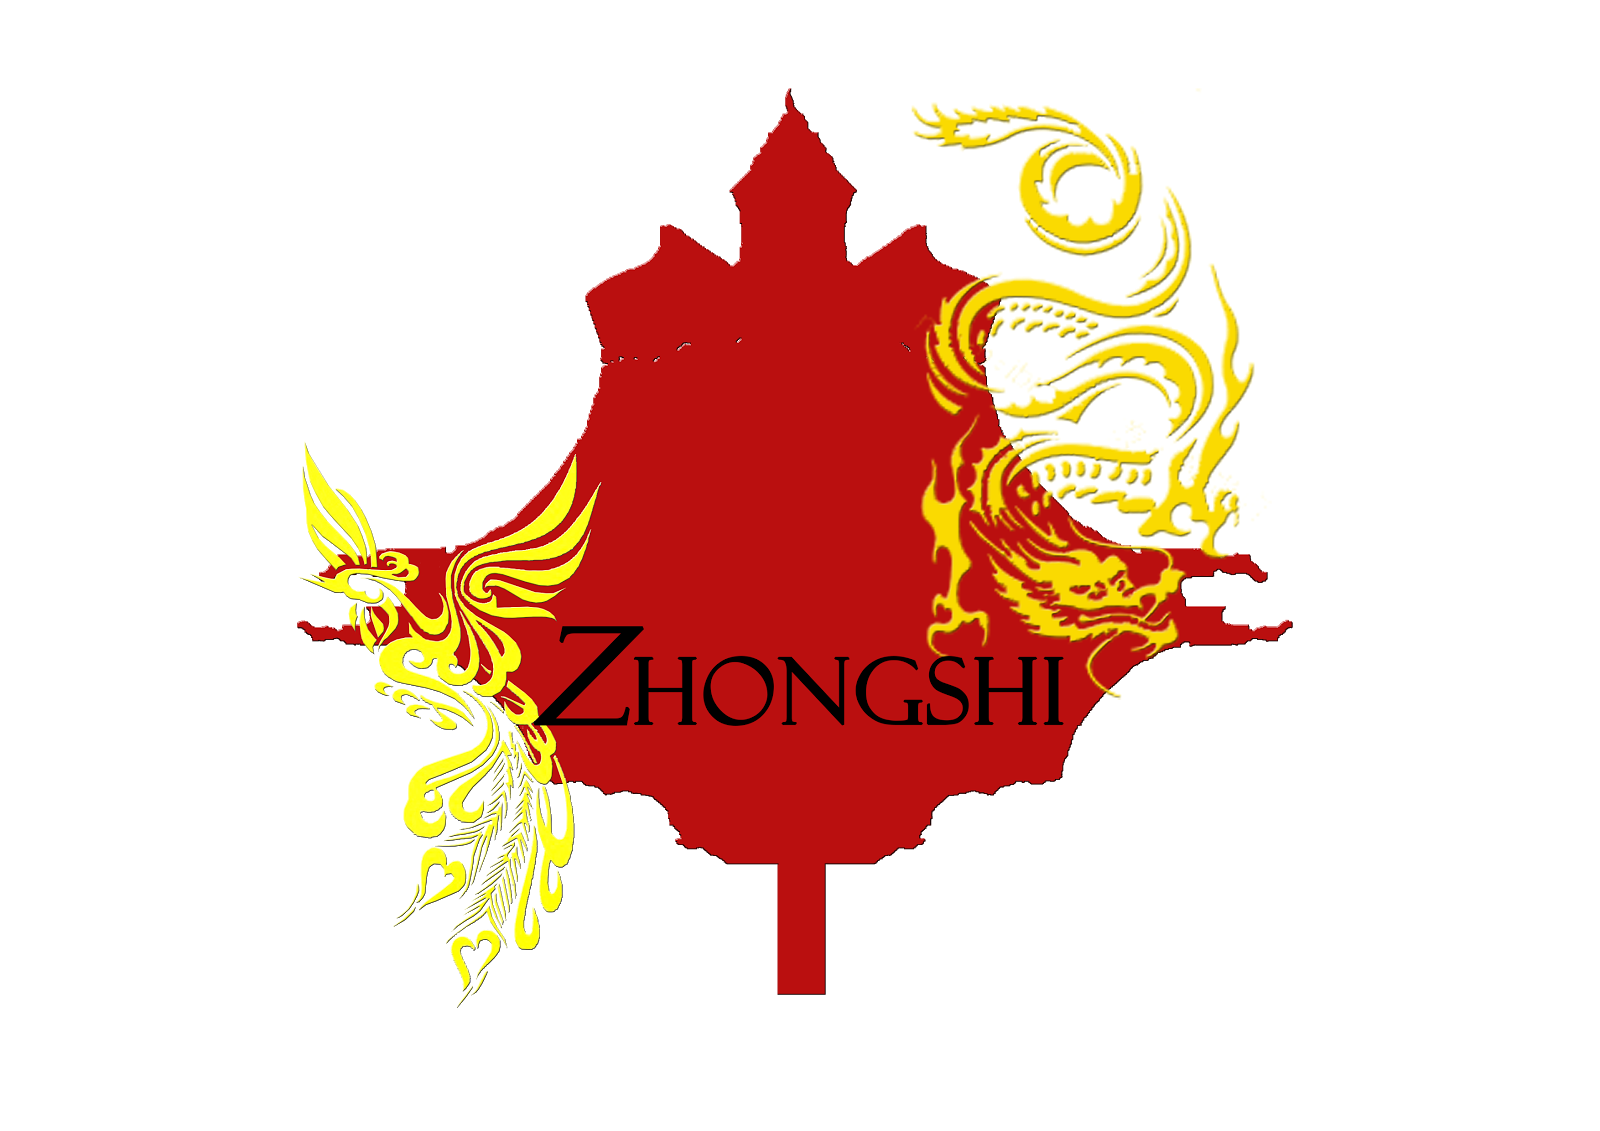 Zhonghi research team